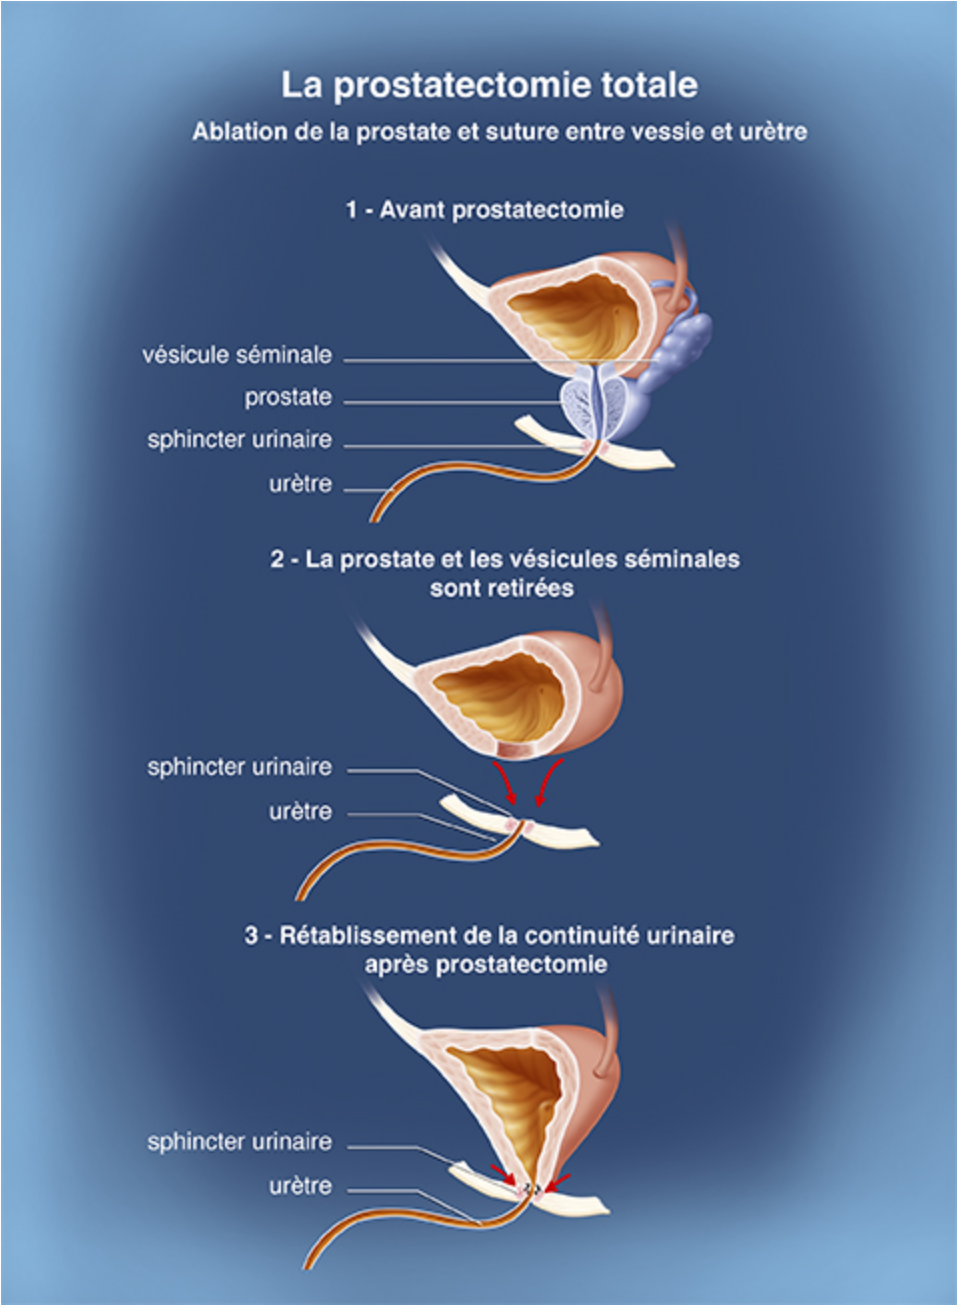 Schéma prostatectomie radicale. Source: e-cancer.